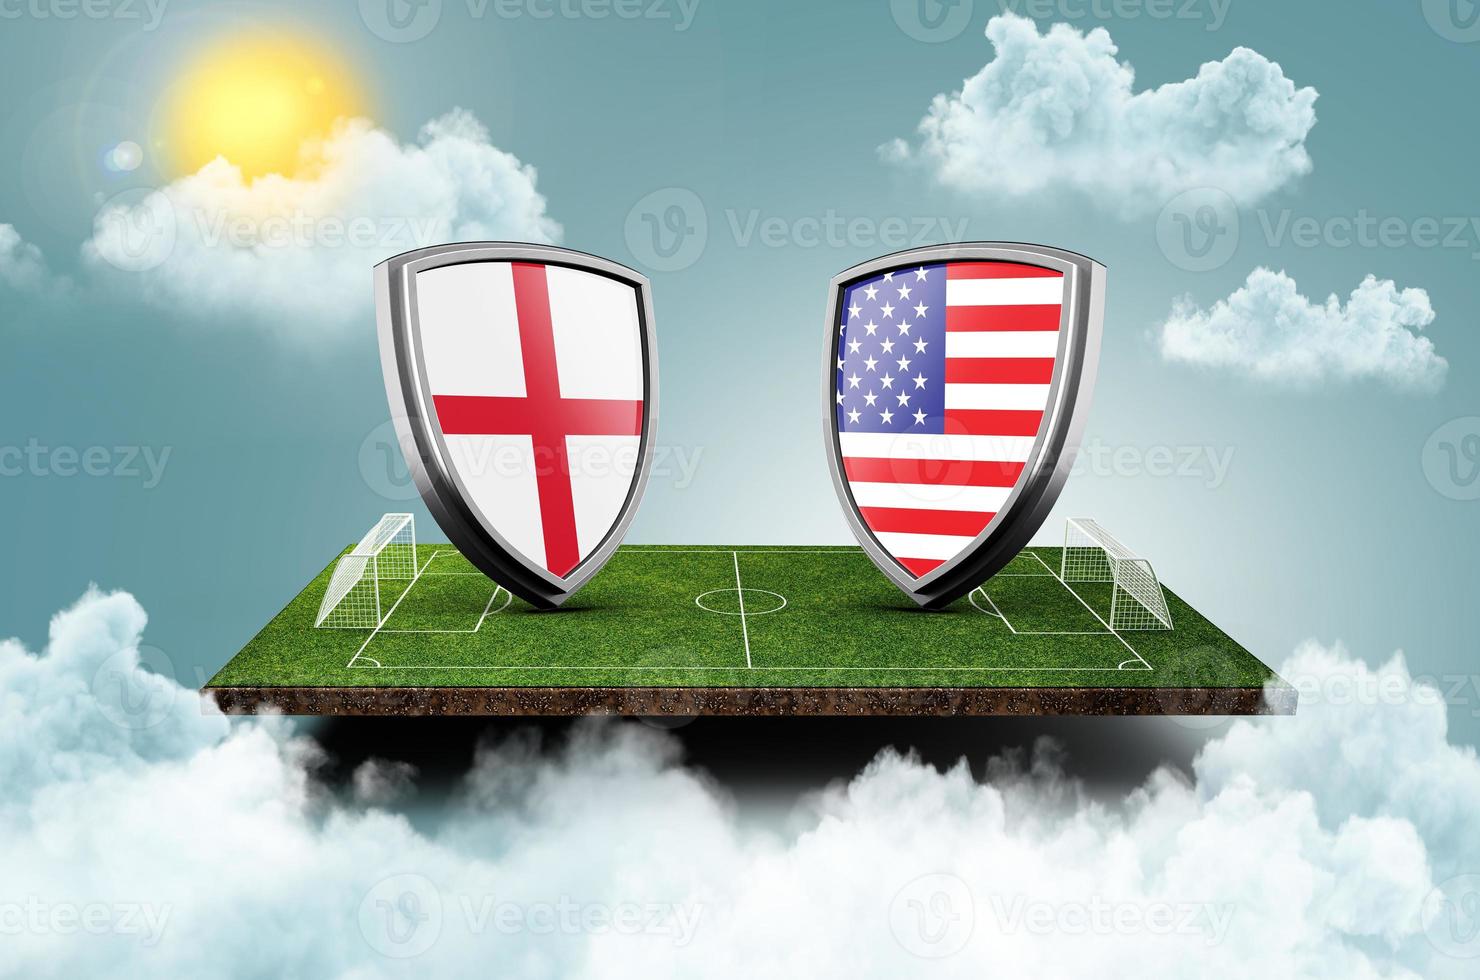 Engeland vs Verenigde Staten van Amerika versus scherm banier voetbal concept. Amerikaans voetbal veld- stadion, 3d illustratie foto